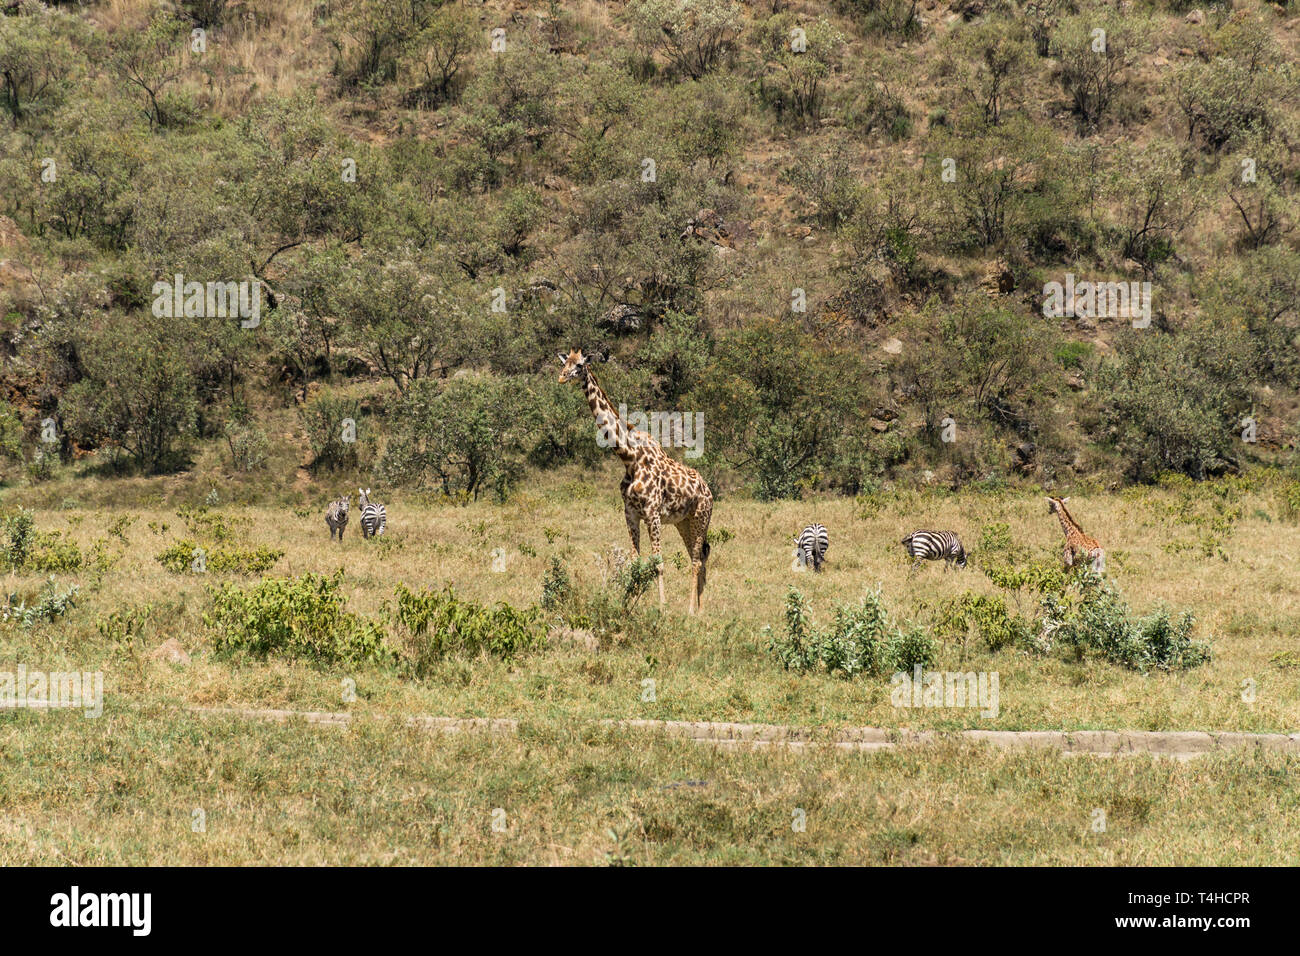 Le Masai Giraffe et zèbres, Hells Gate National Park, Kenya Banque D'Images